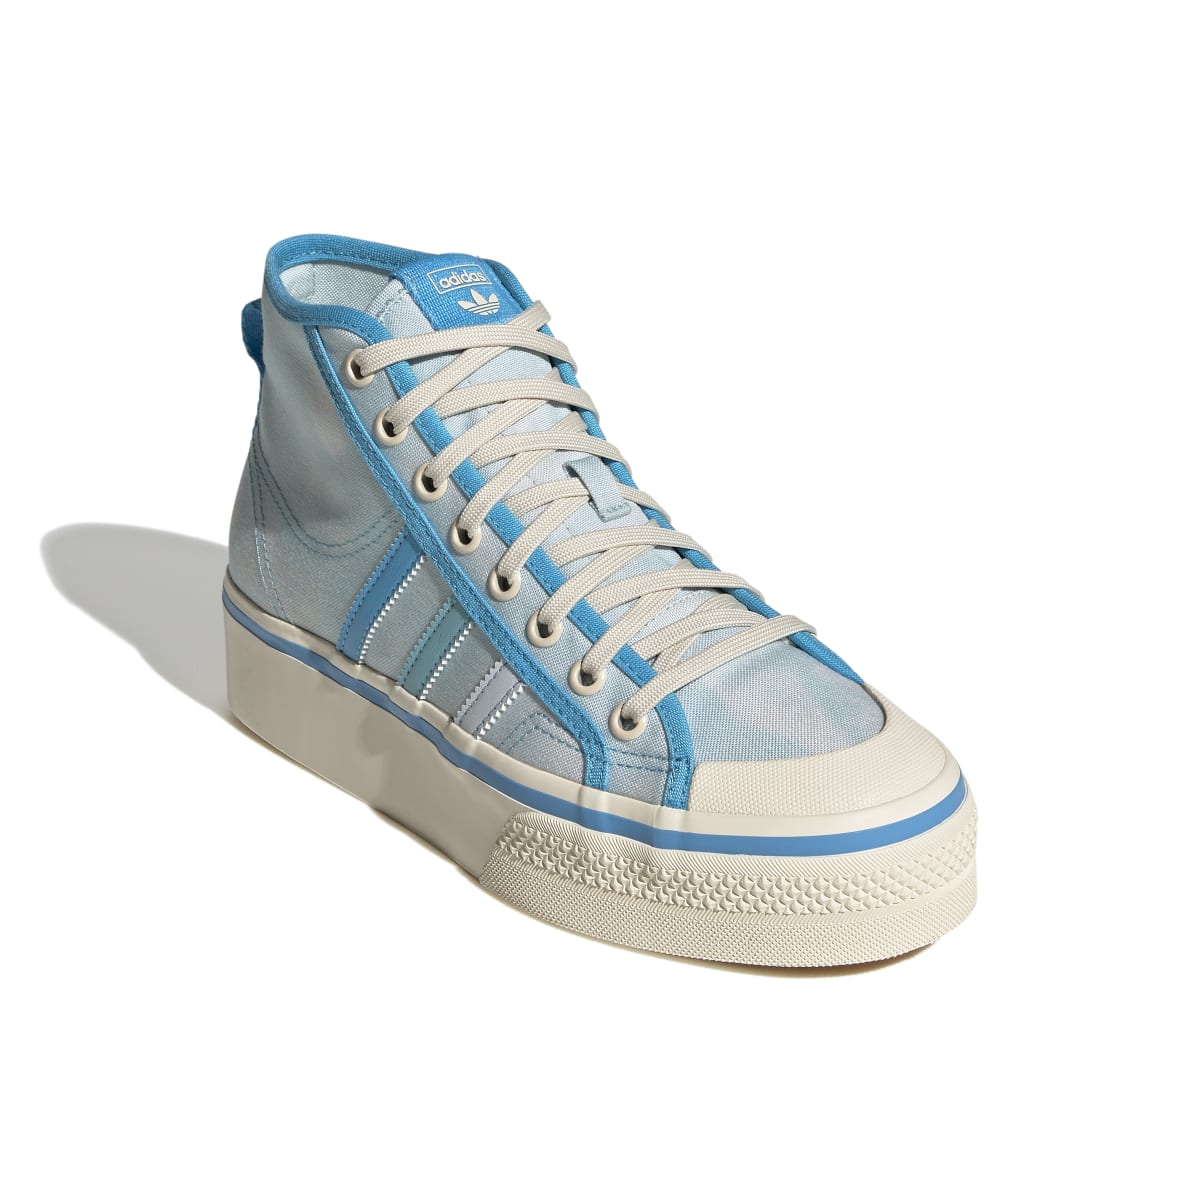 ADIDAS GX4604 NIZZA PLATFORM WMN'S (Medium) Blue/Pantone/White Textile Lifestyle Shoes